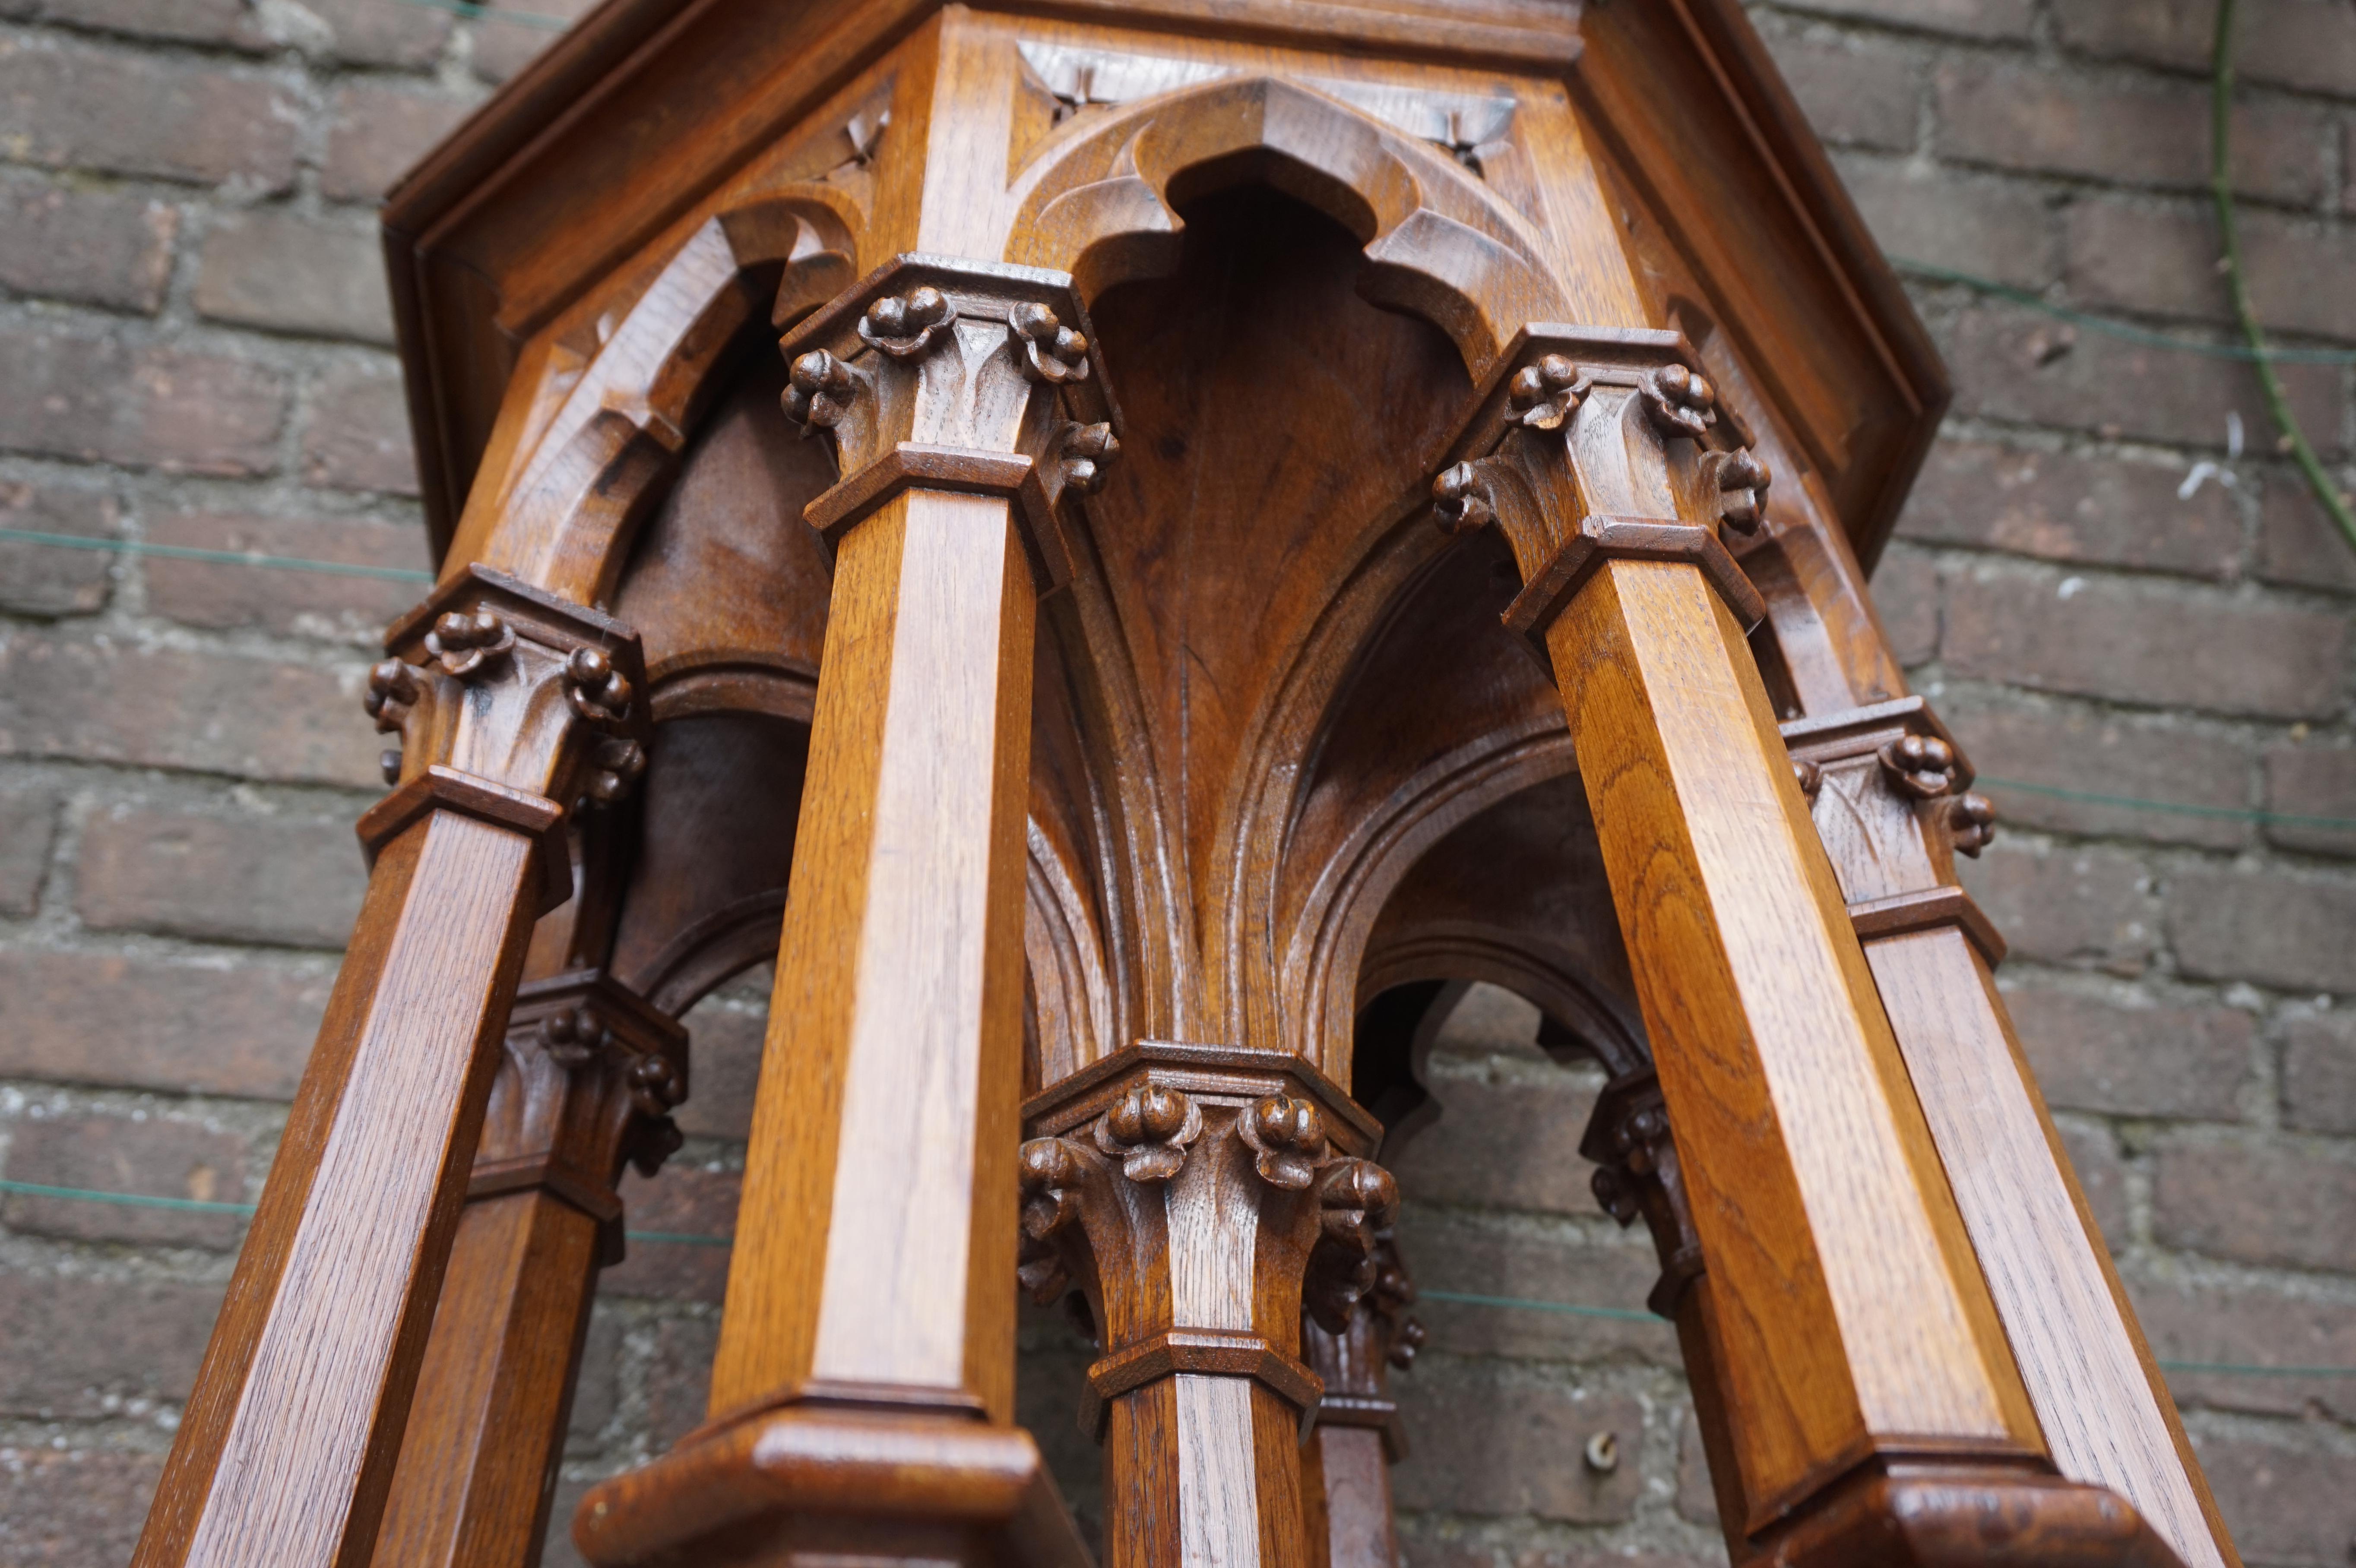 Dutch Antique & Monumental Handcarved Oak Gothic Revival Church Columns Pedestal Stand